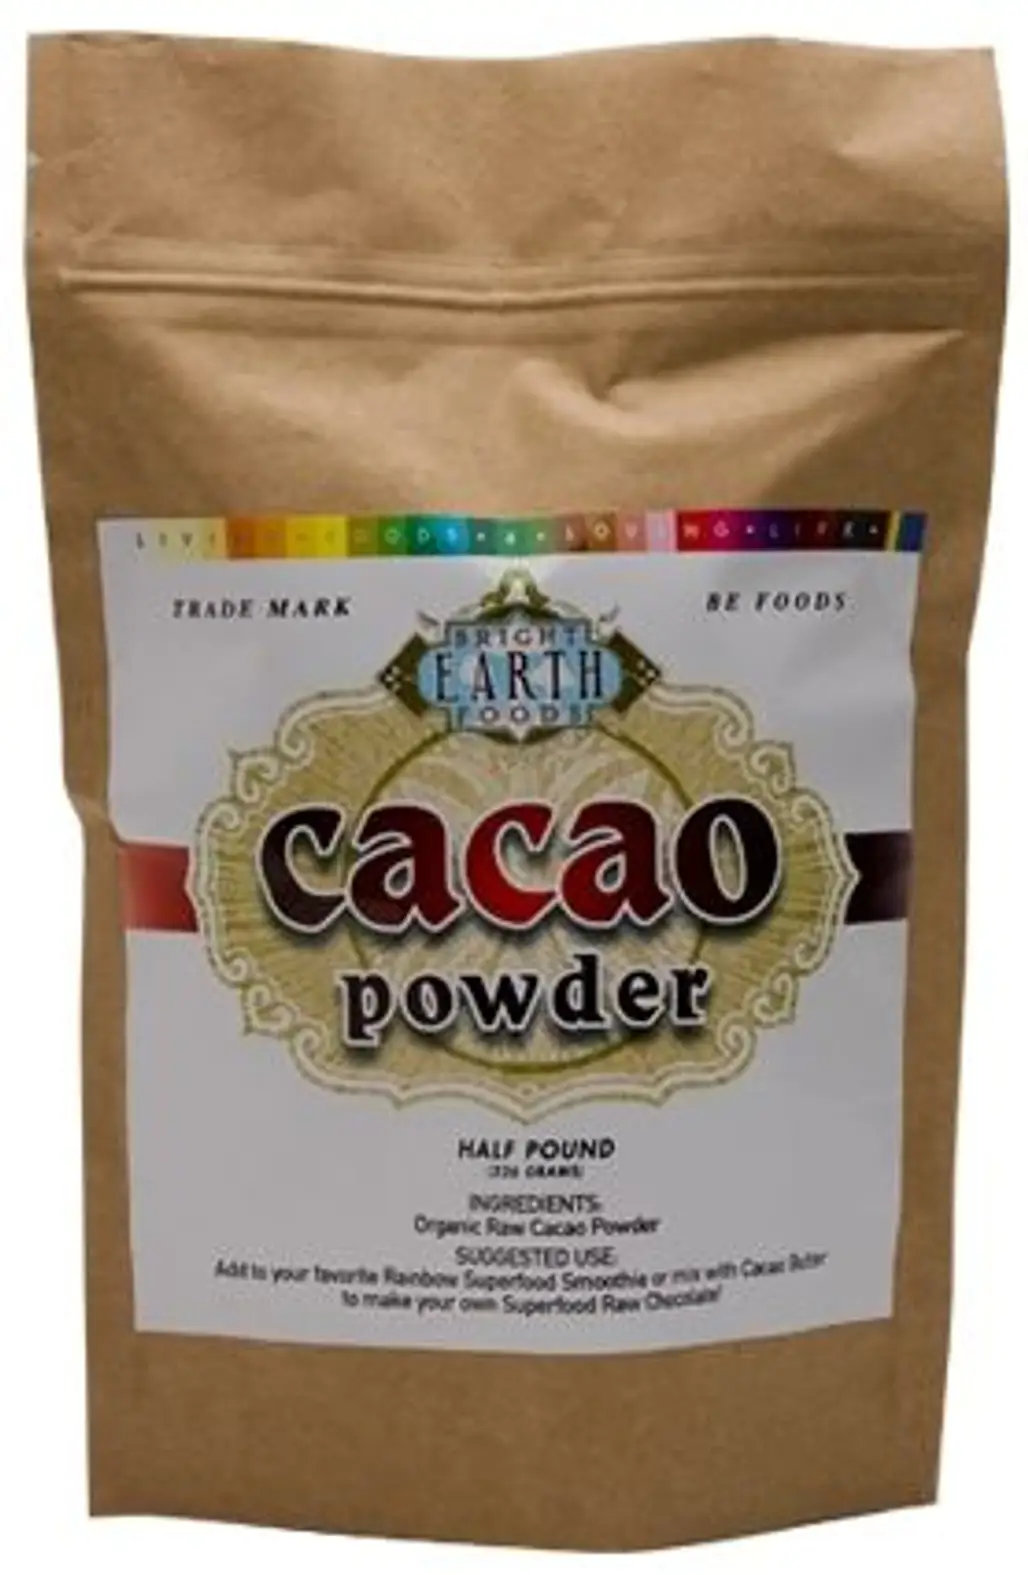 Raw Cacao